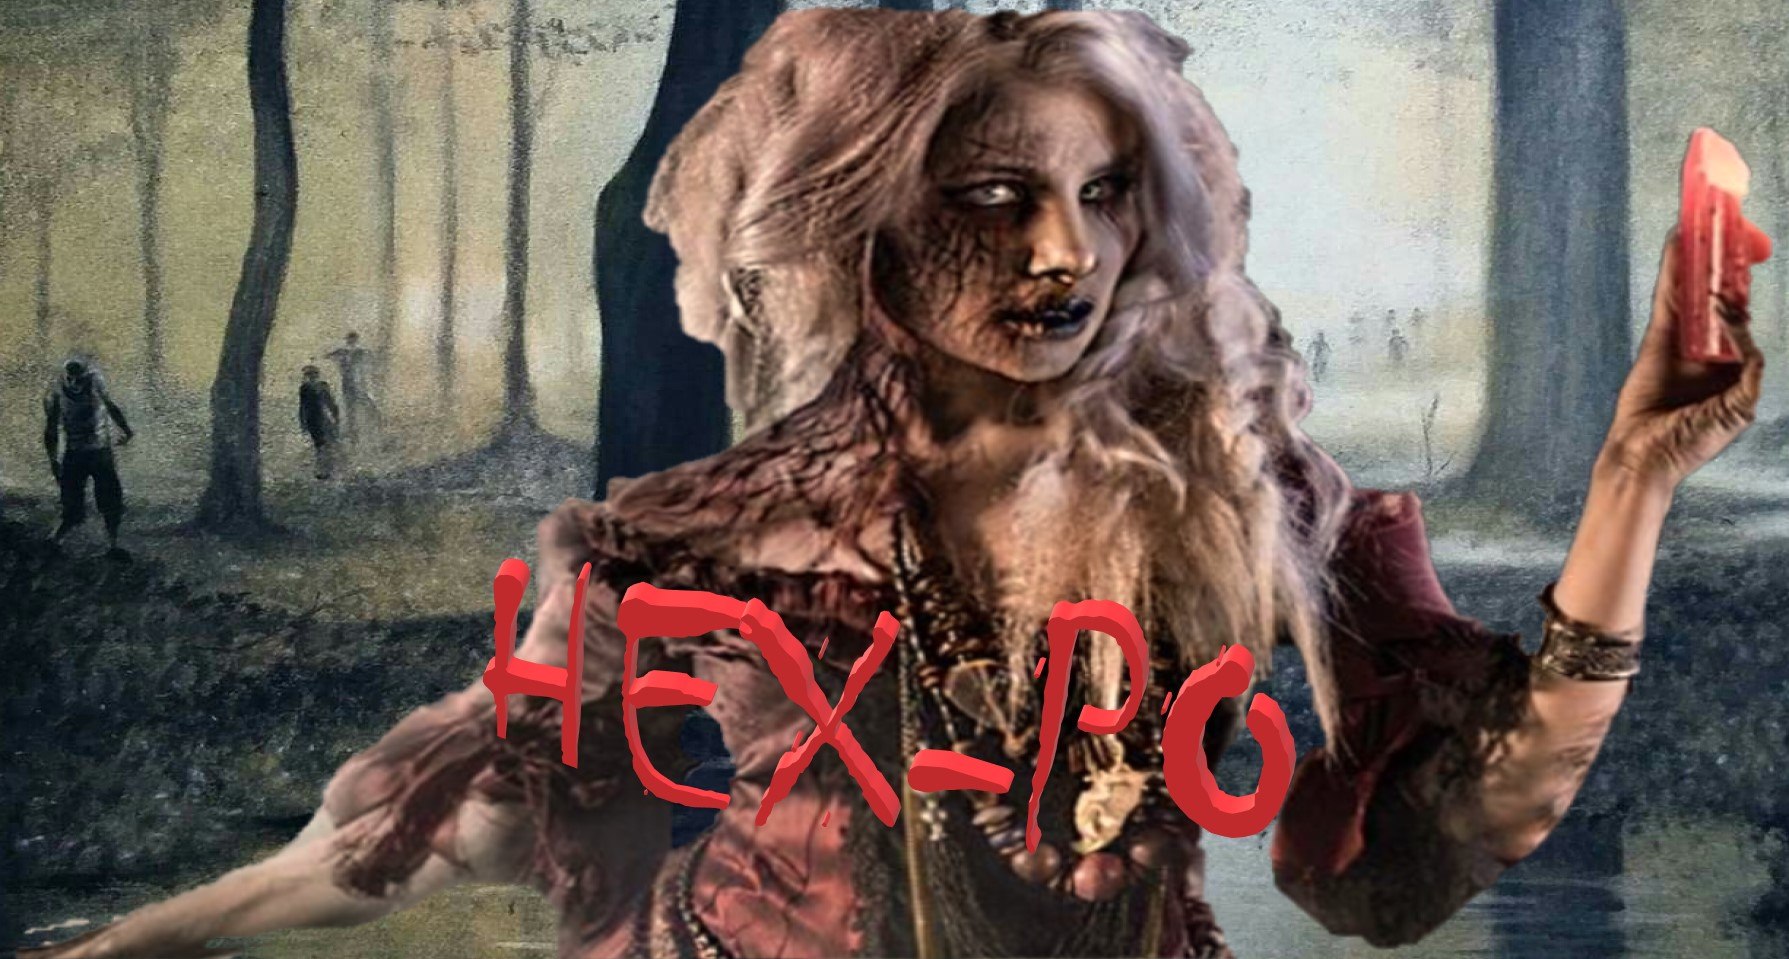 Event: HEXPO 2019 – Always Be Ca$hing!